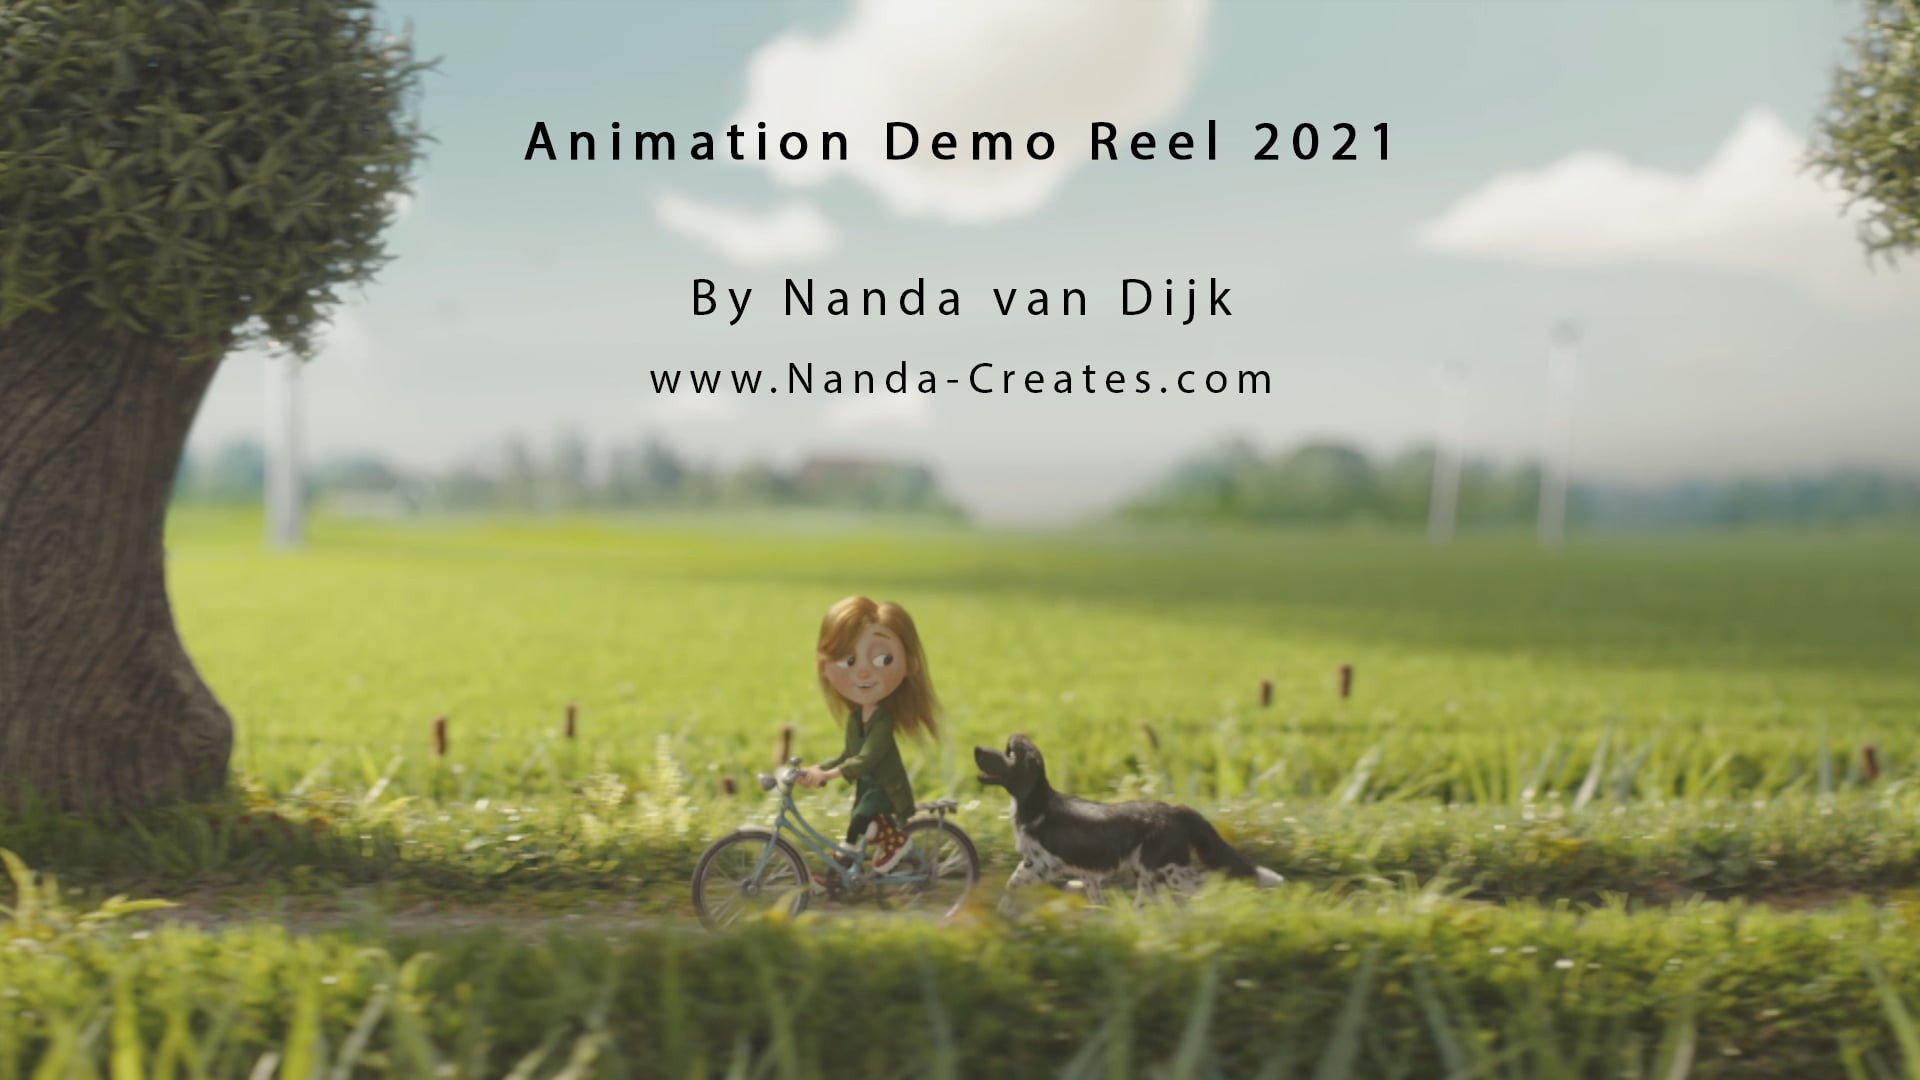 Animation Demo Reel 2021 by Nanda van Dijk